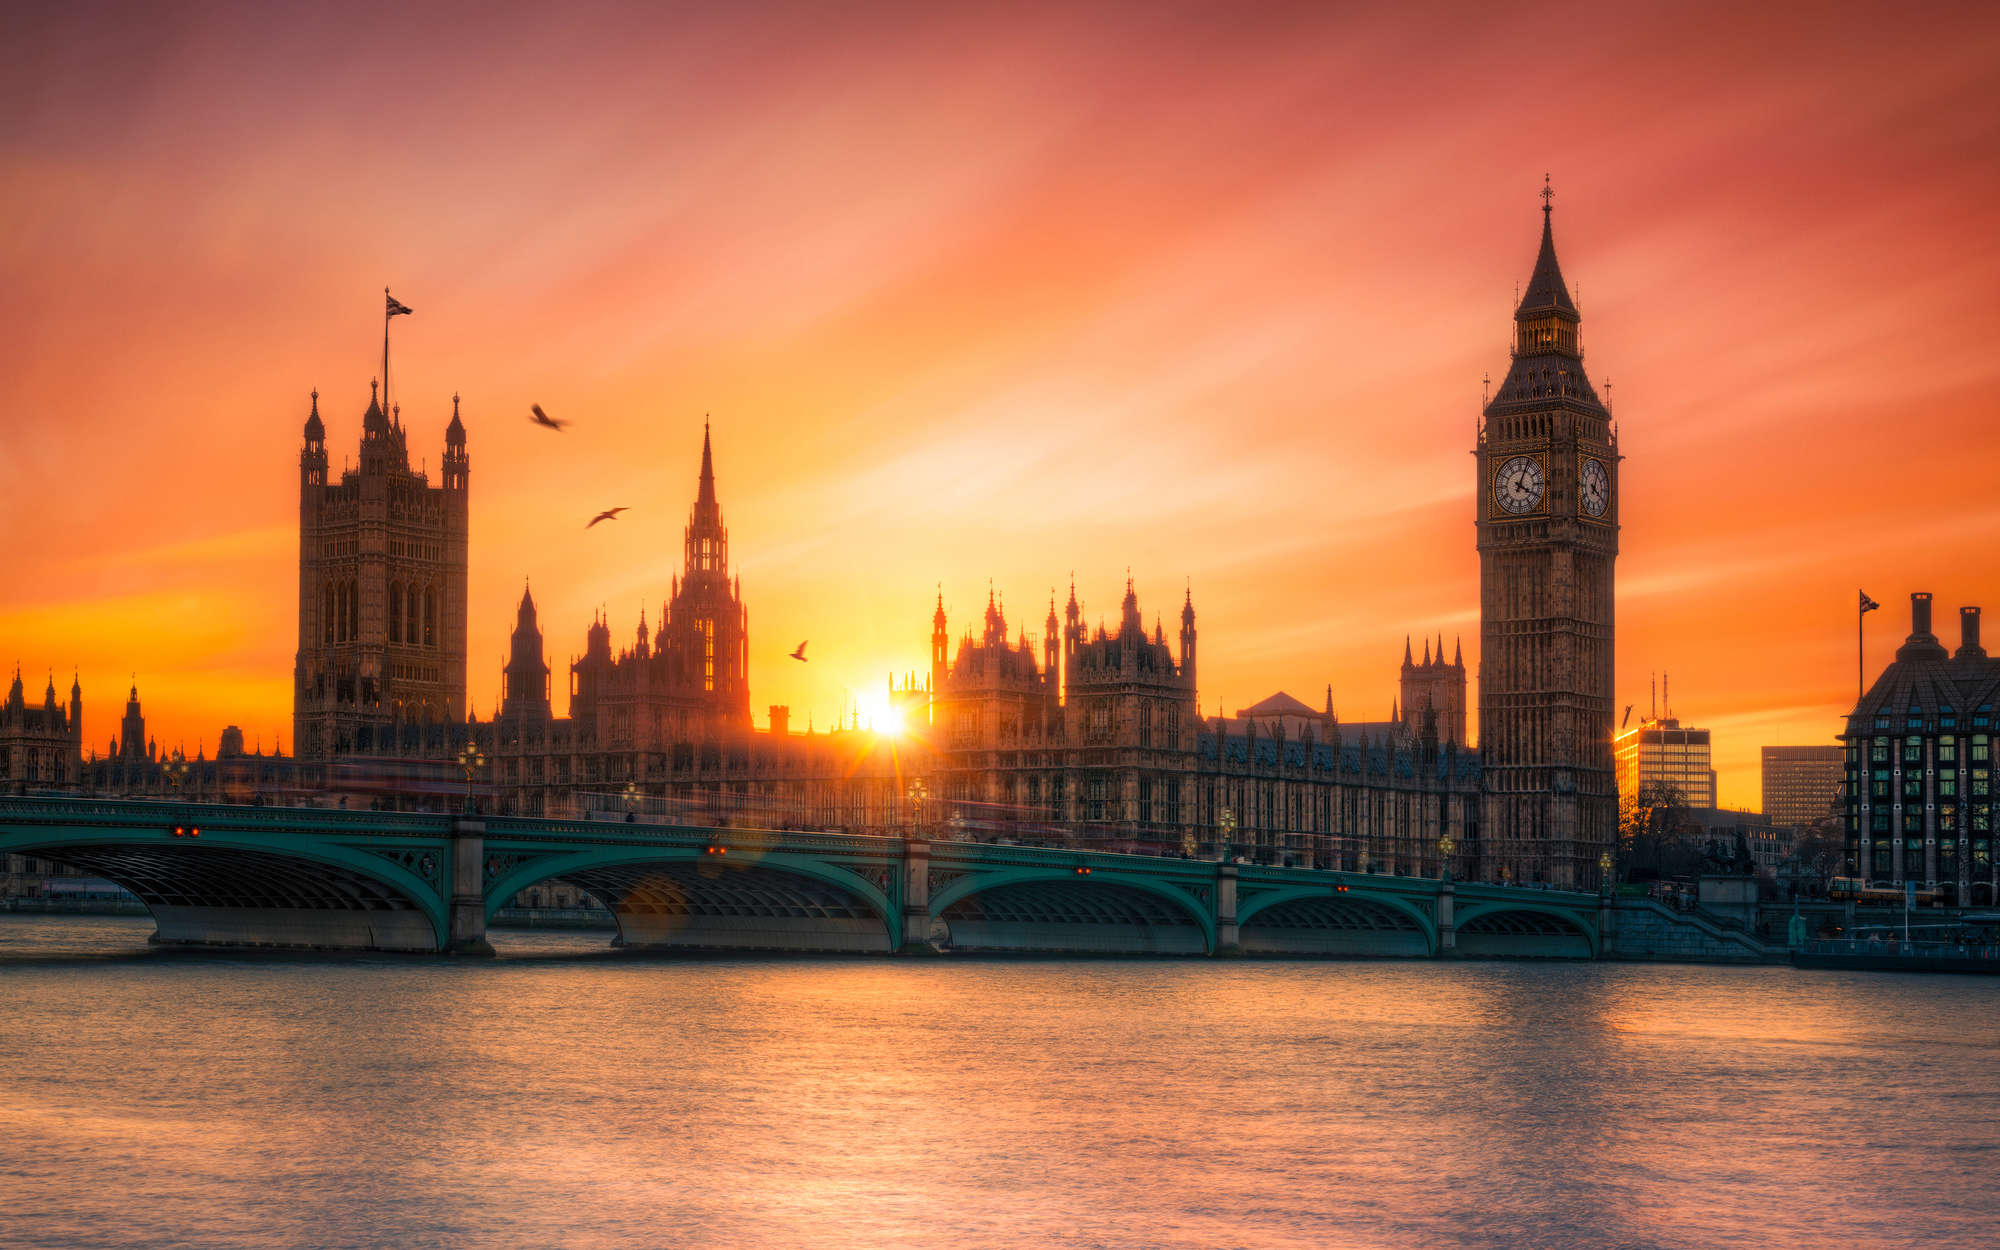             Photo wallpaper London skyline at sunset - pearlescent smooth fleece
        